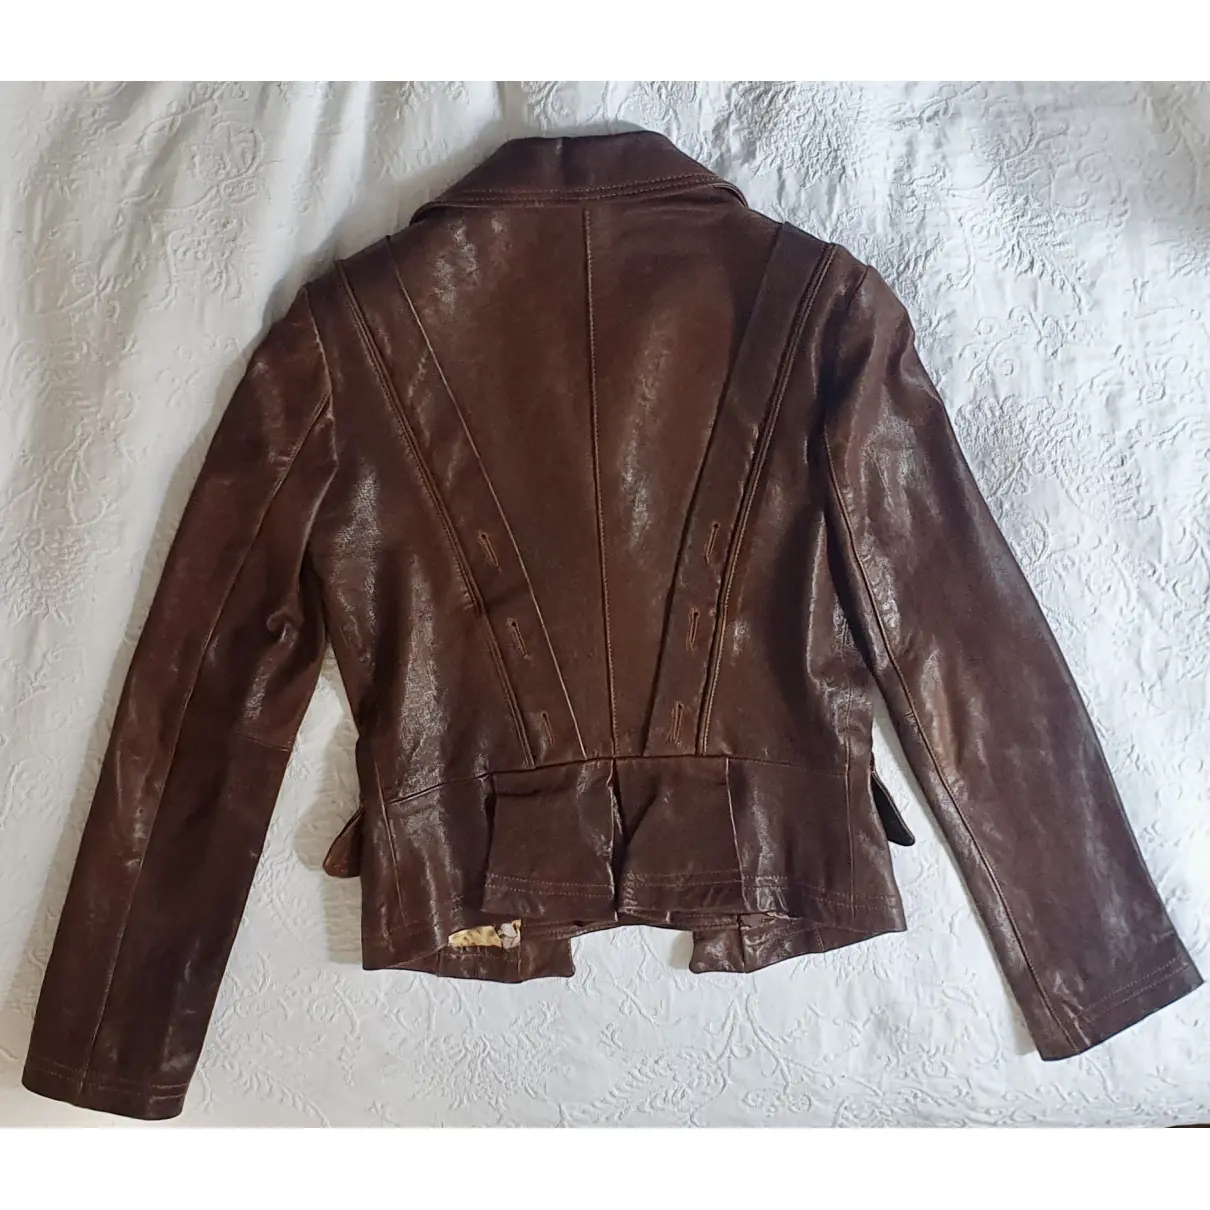 Buy D&G Leather biker jacket online